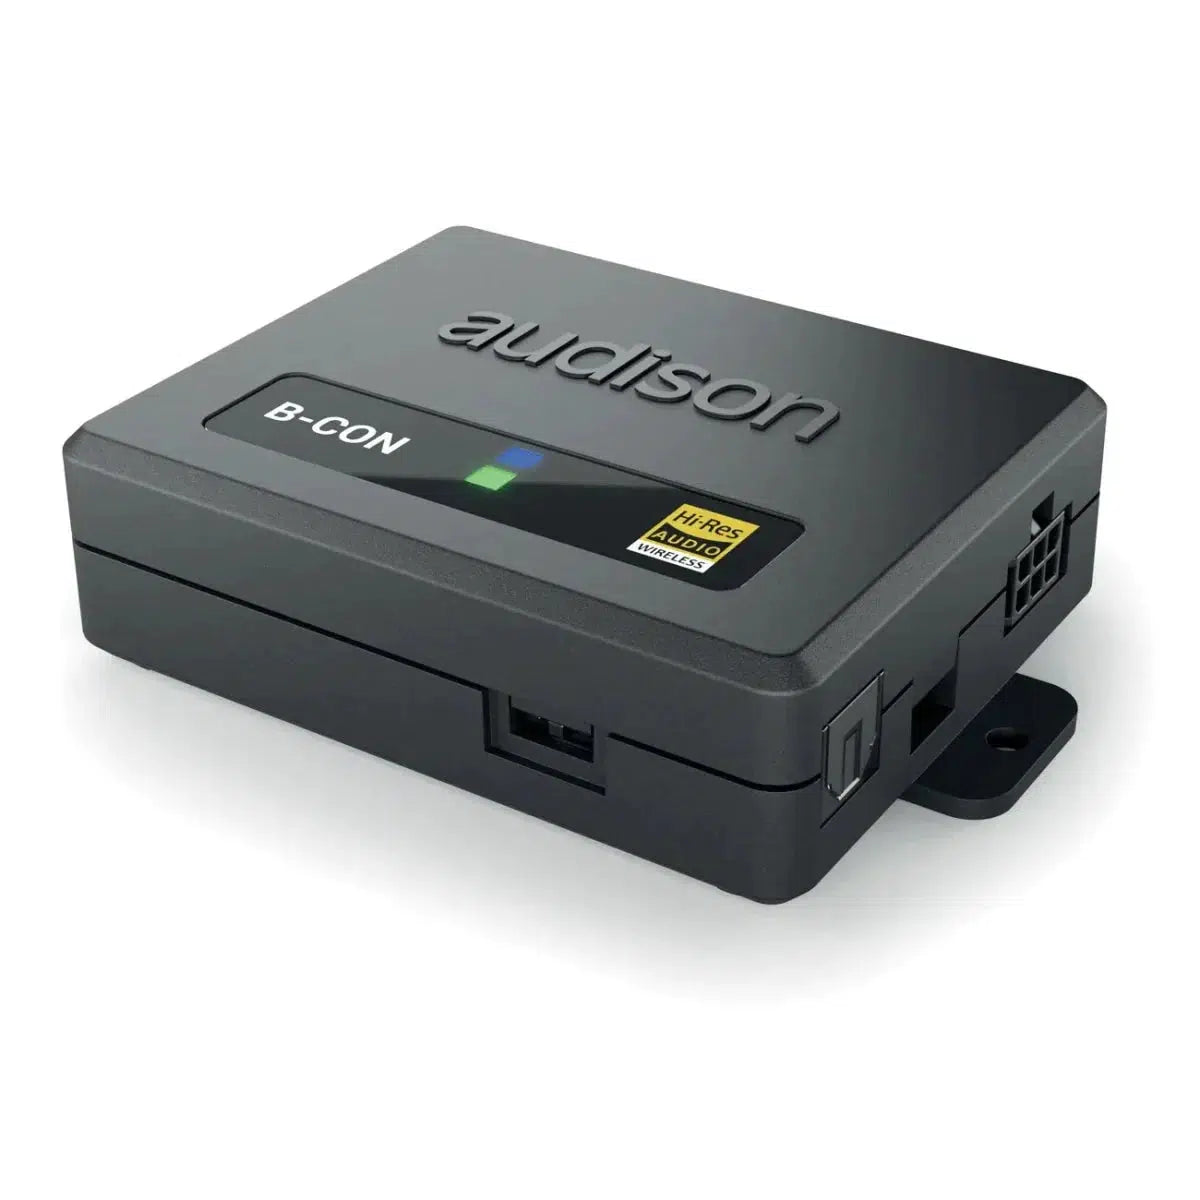 Audison-bit B-CON-Amplifier-Accessories-Masori.de